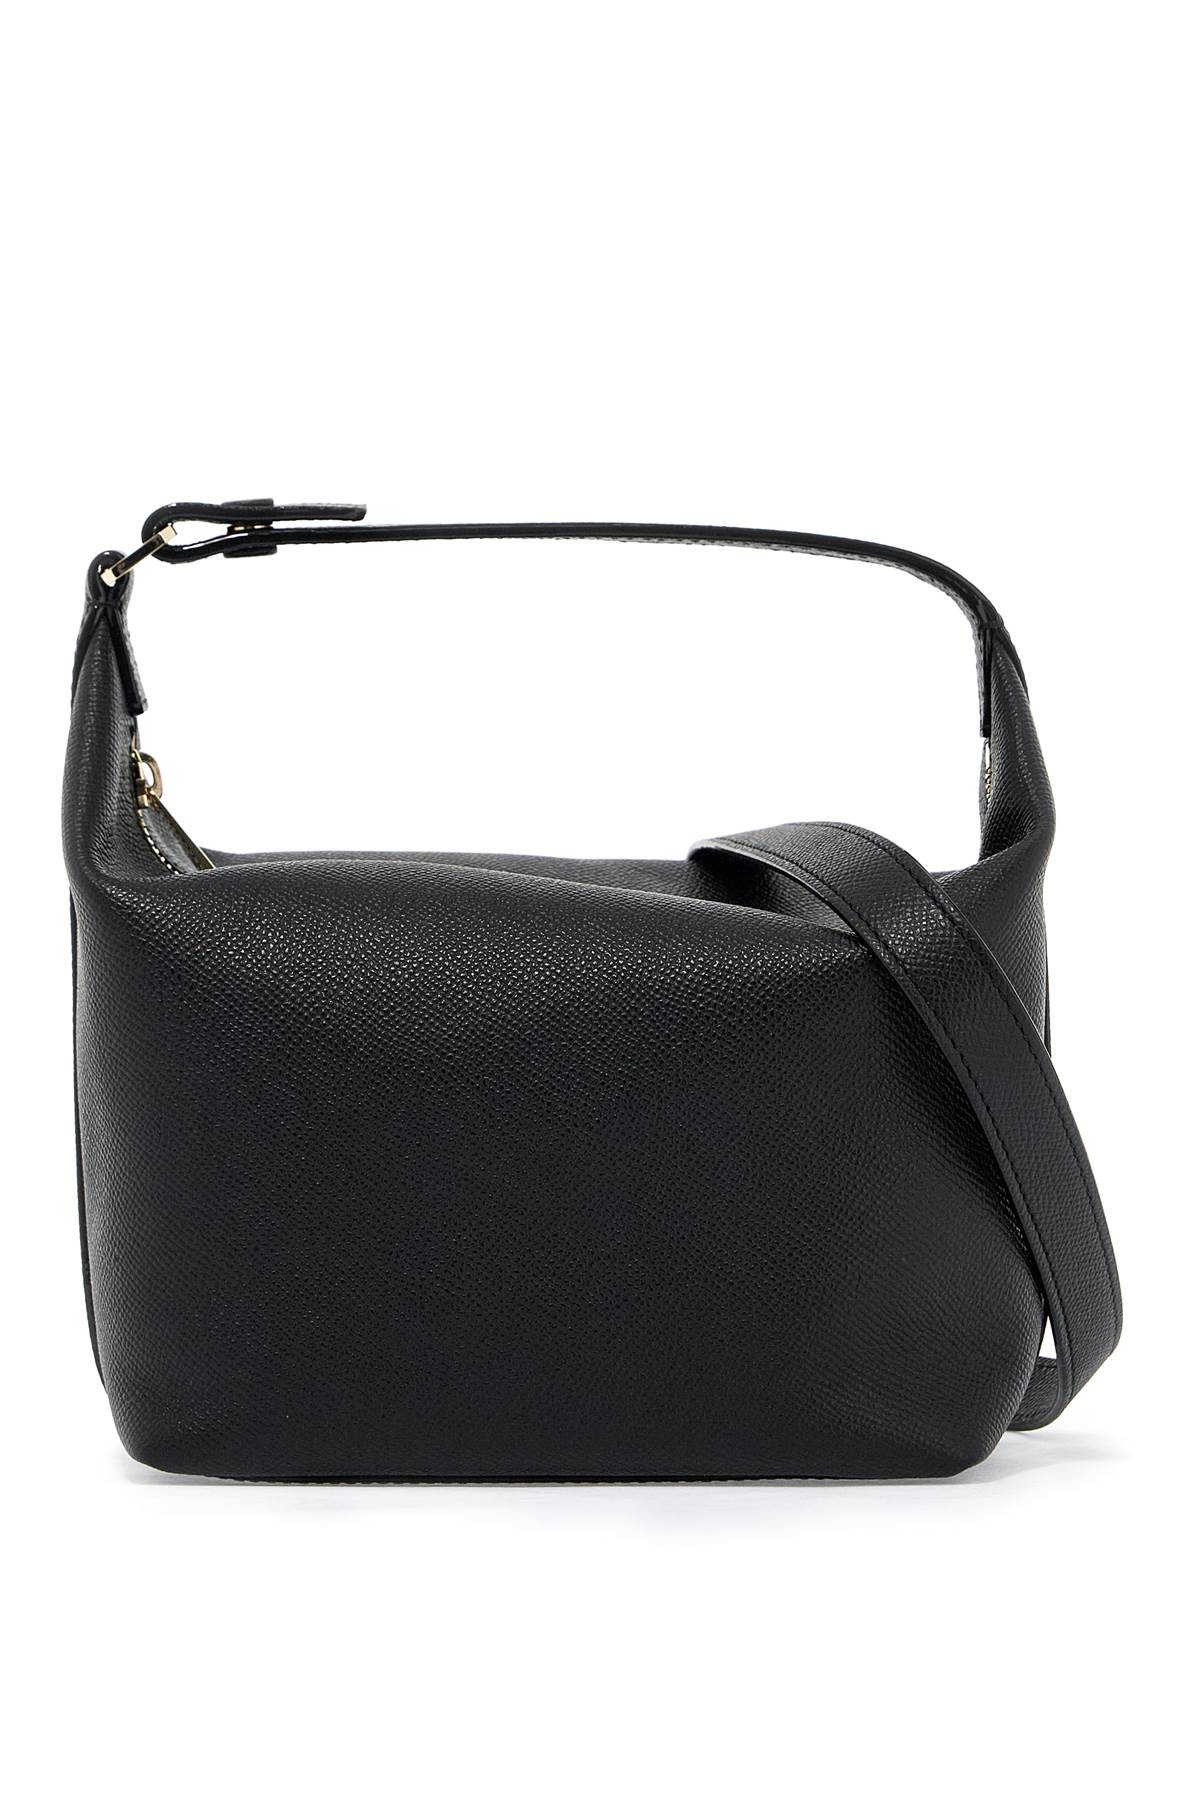 Valextra VALEXTRA mini mochi handbag for